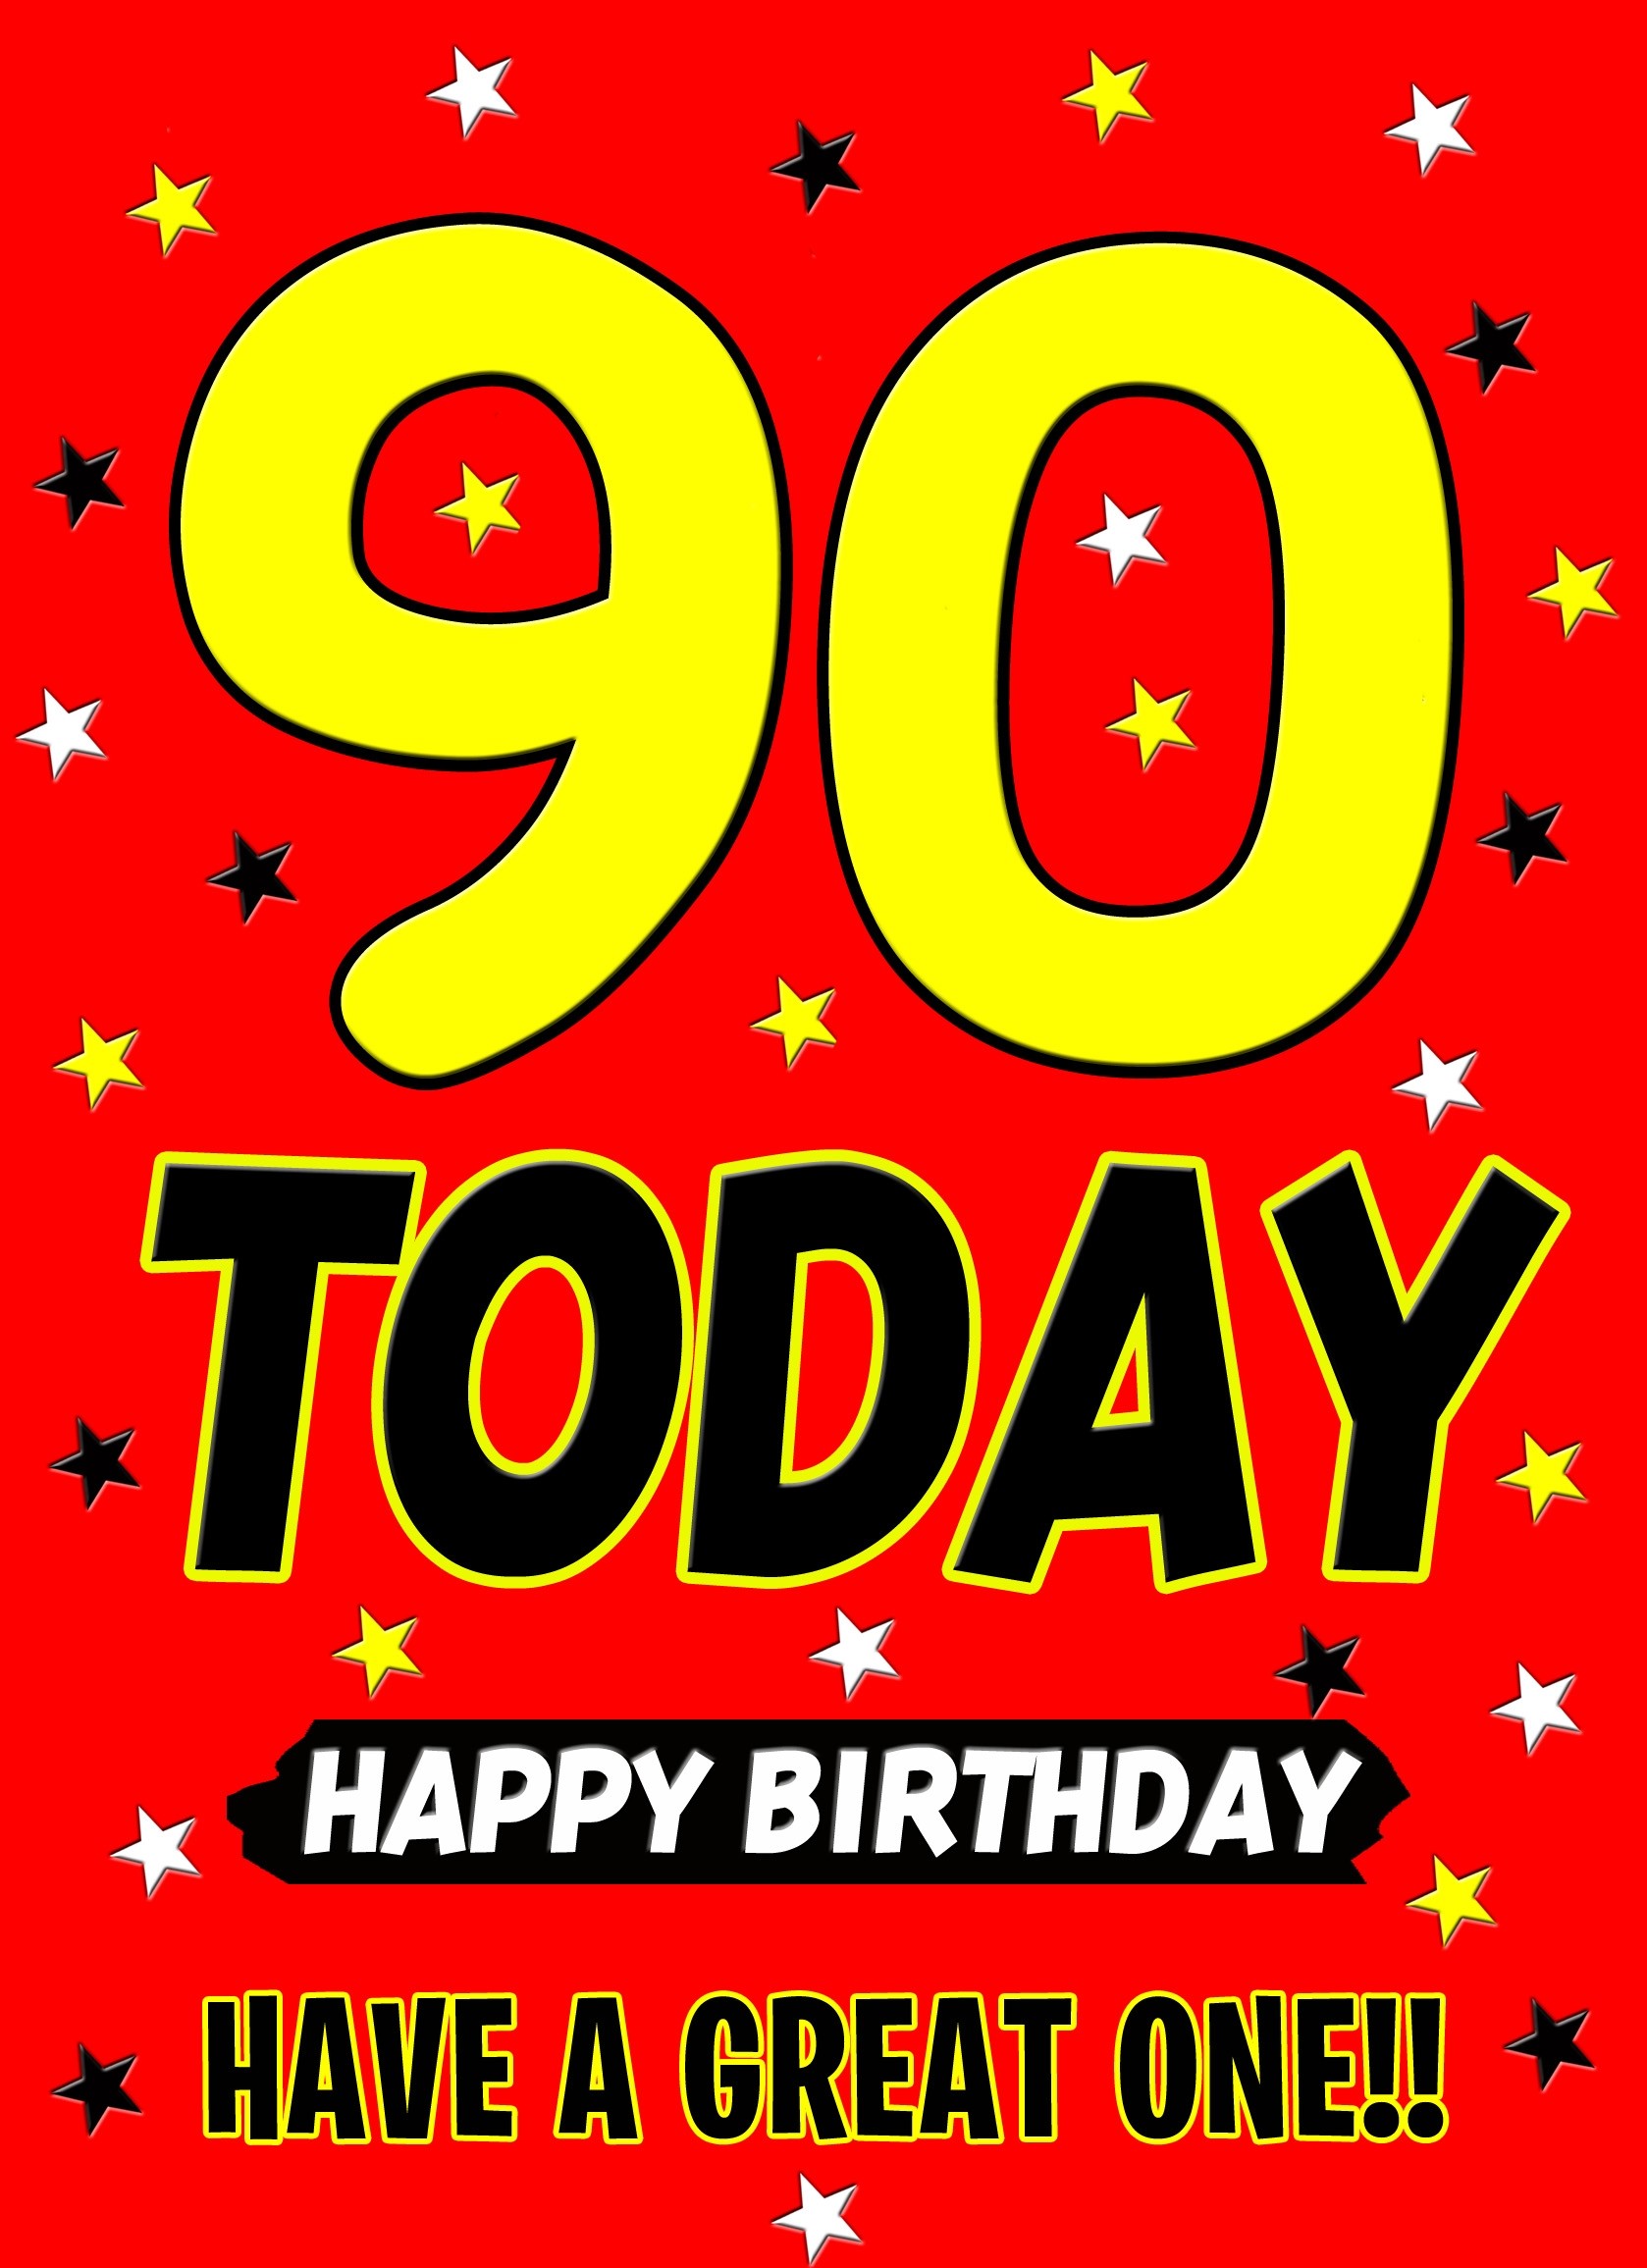 90 Today Birthday Card